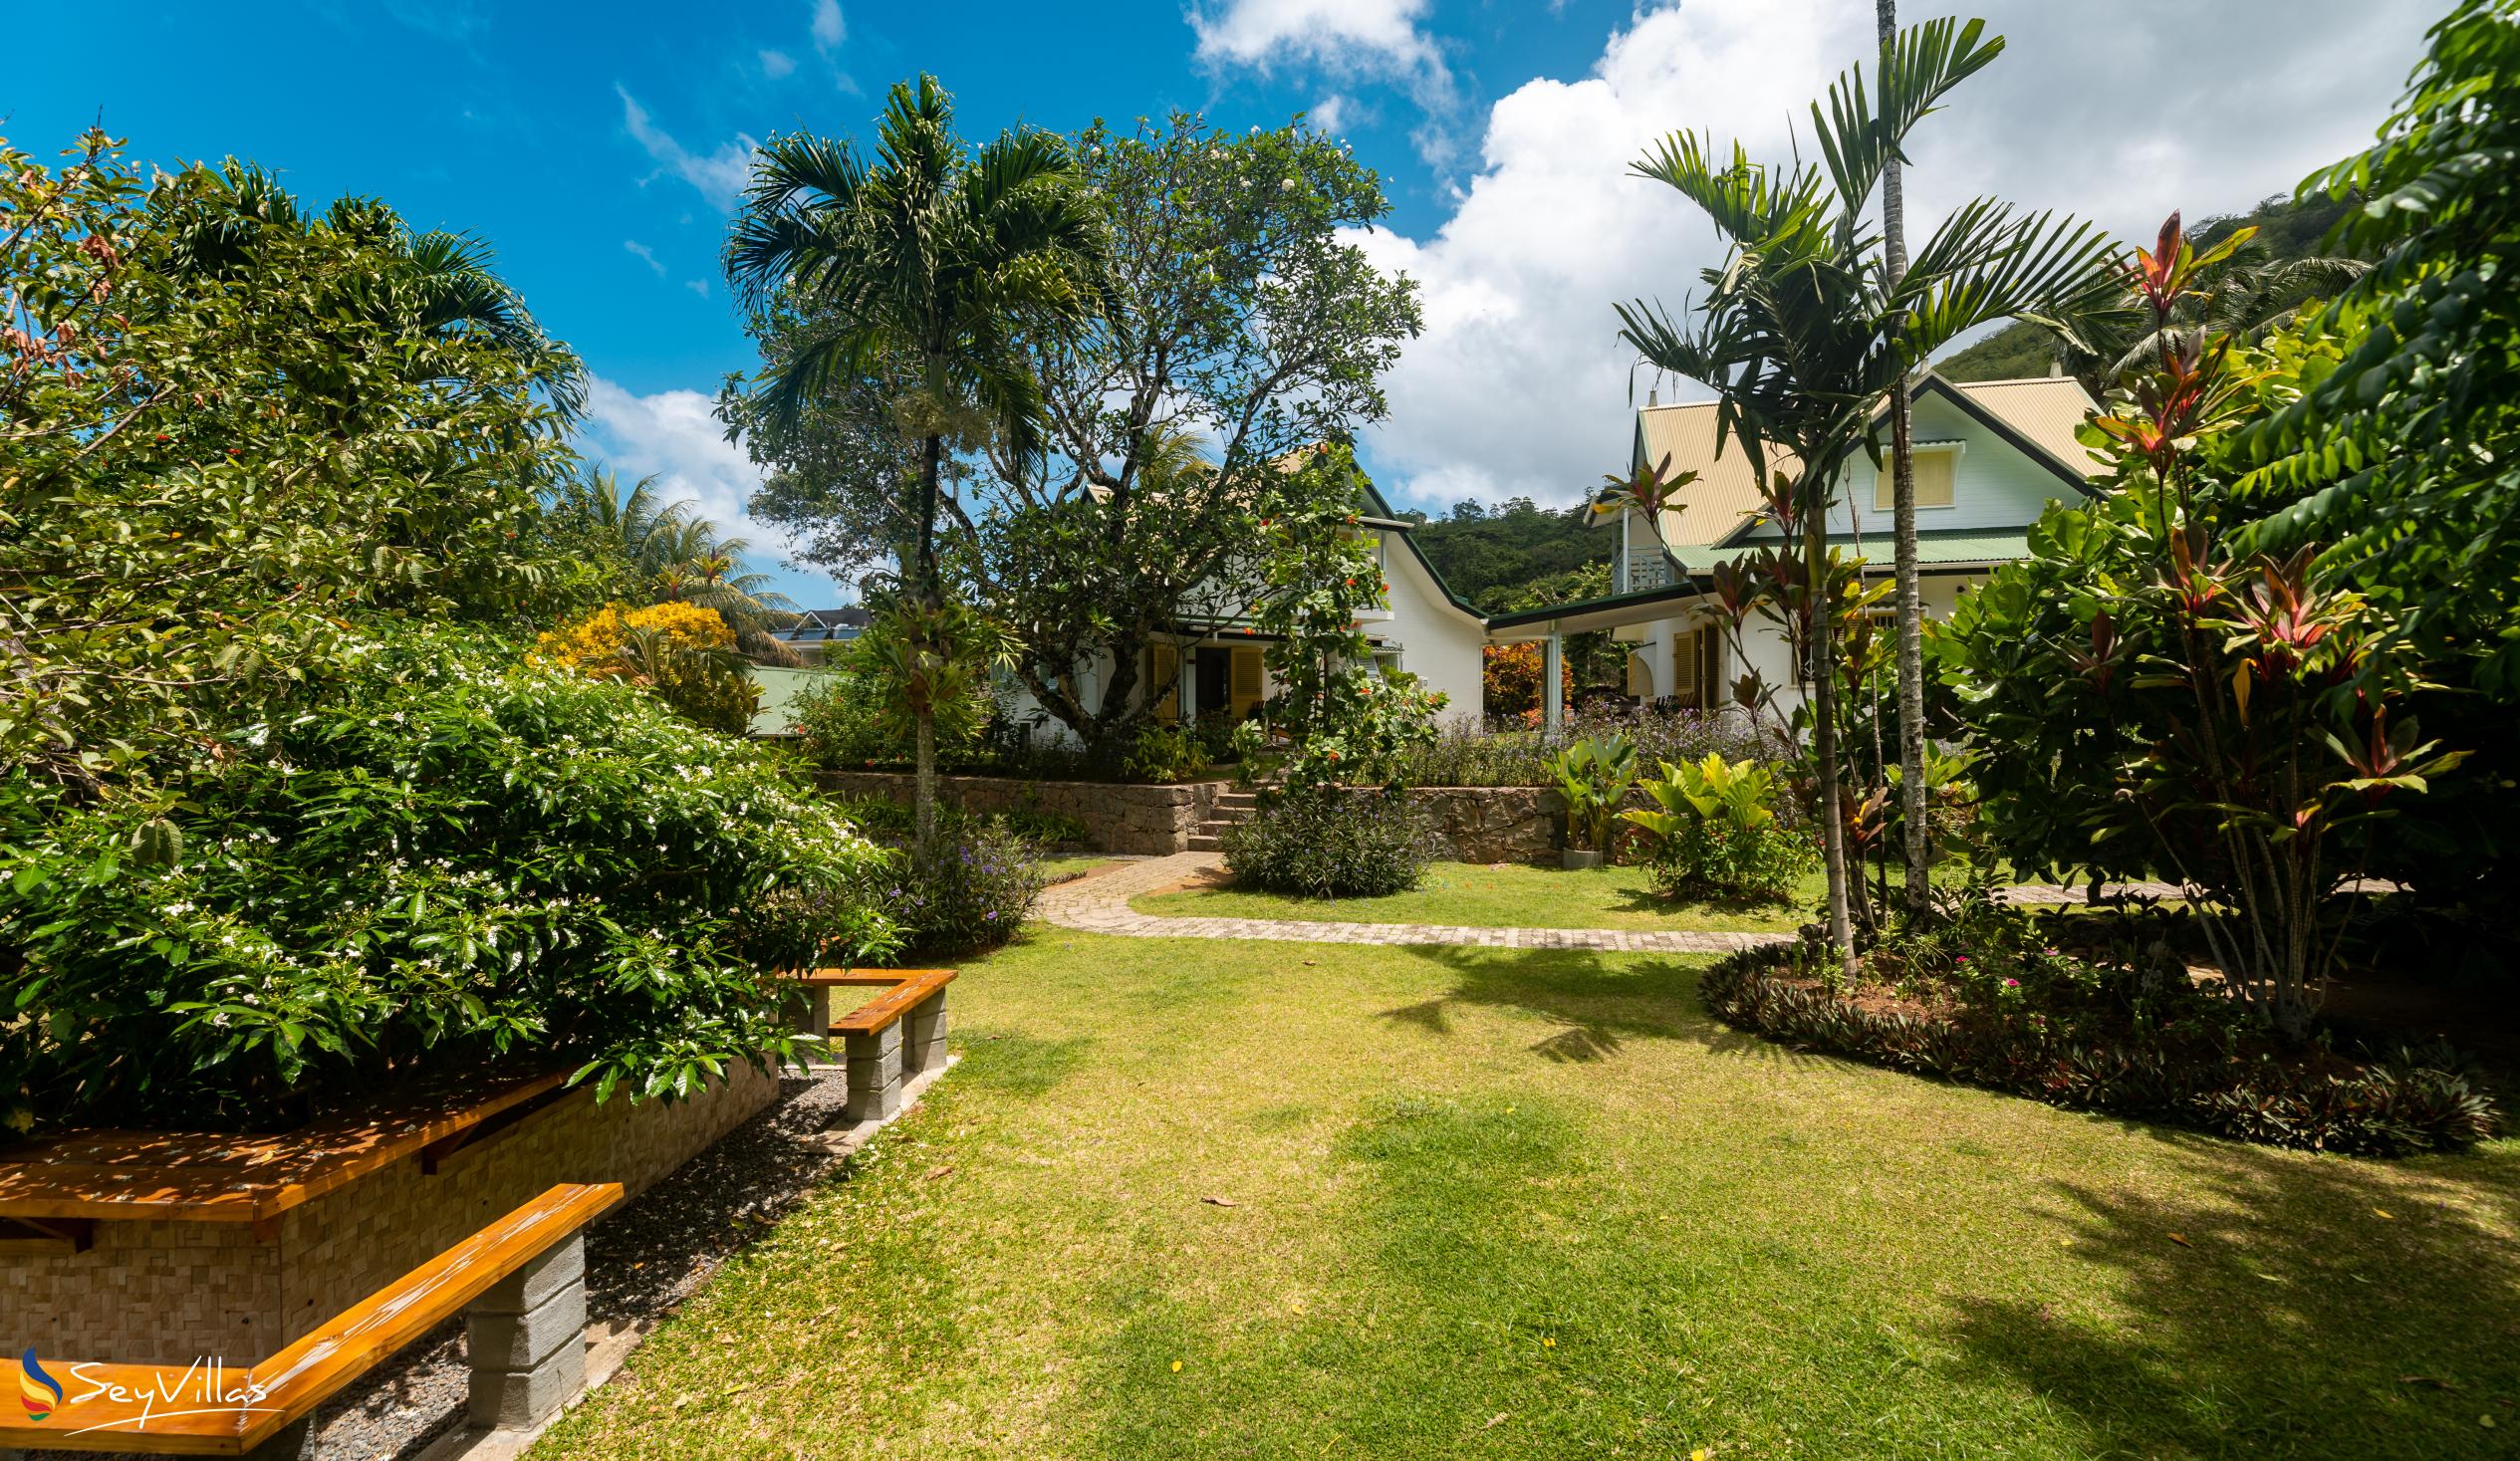 Photo 9: Villa Kordia - Outdoor area - Mahé (Seychelles)